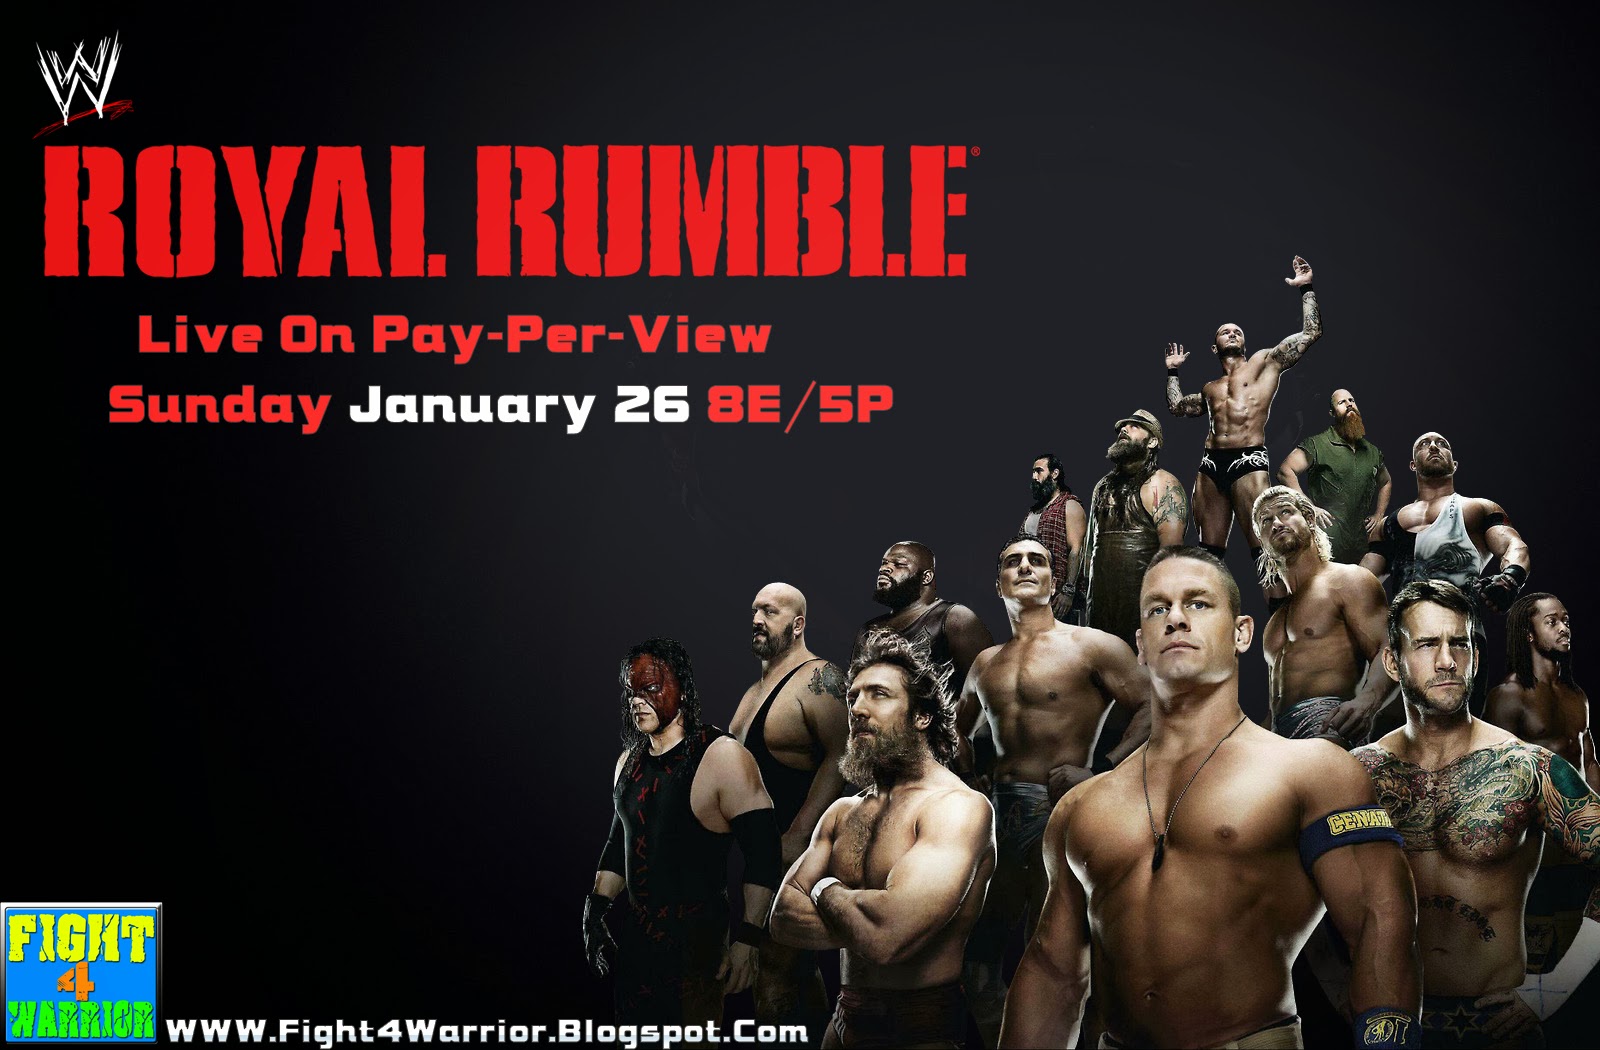 Wwe Royal Rumble 2014 Wallpaper ~ Fight4warrior